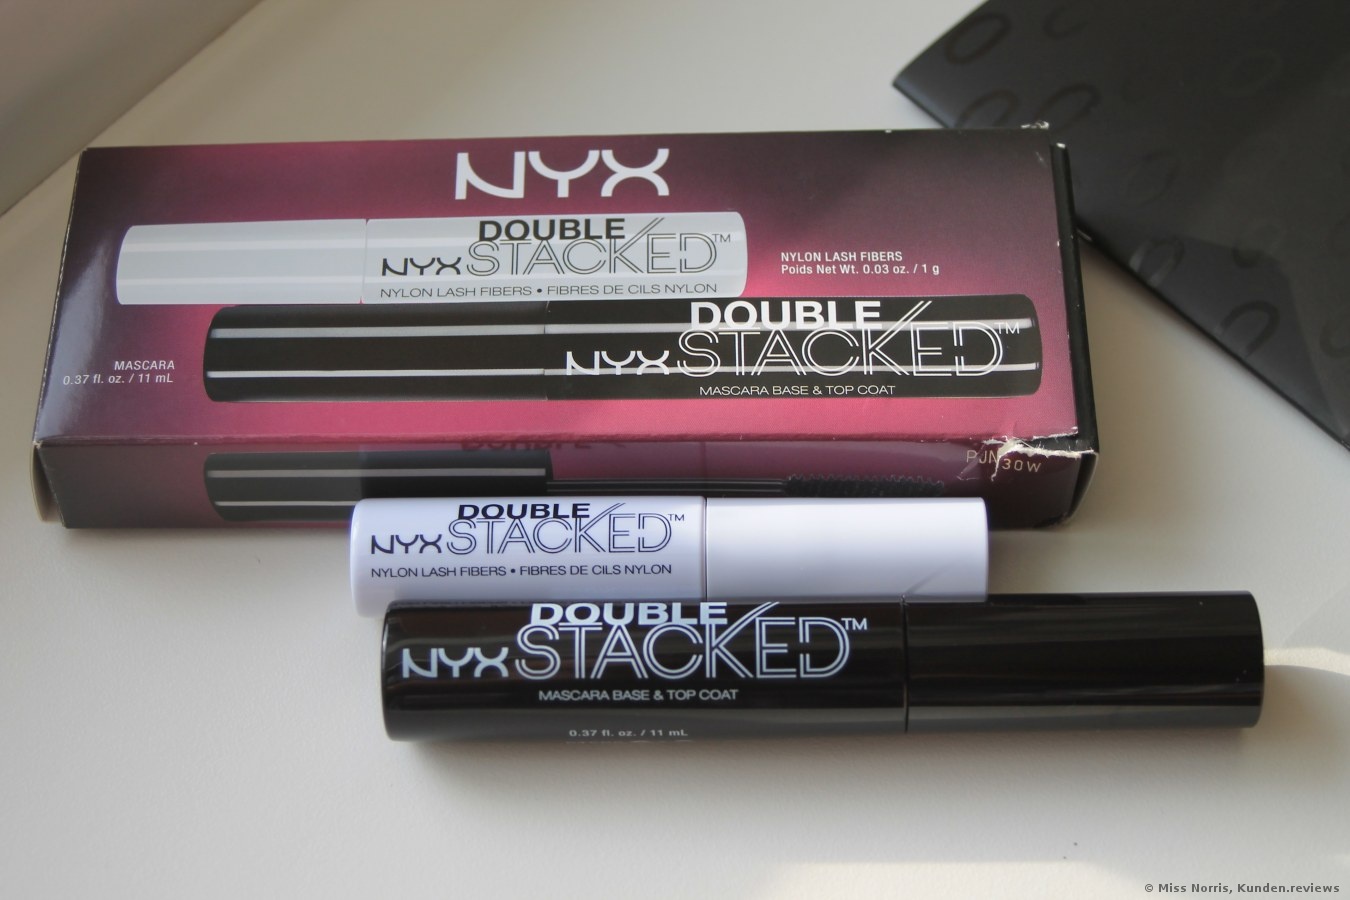 NYX Professional Makeup Mascara Double Stacked Mascara